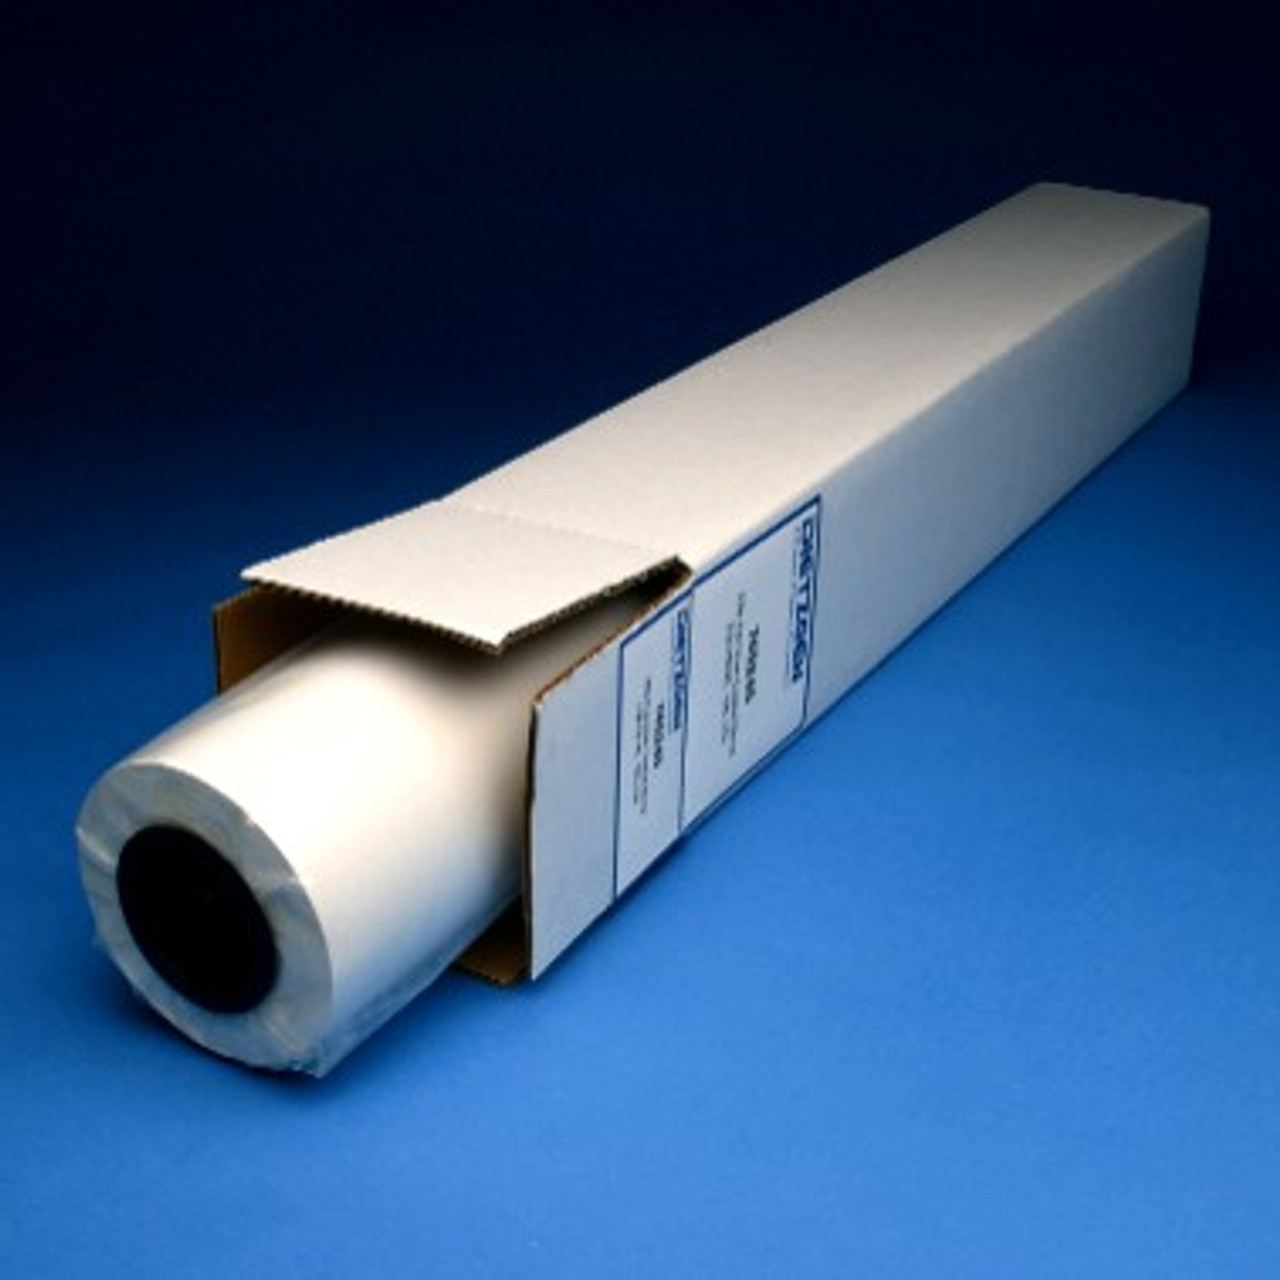 36 lb heavyweight coated bond paper roll